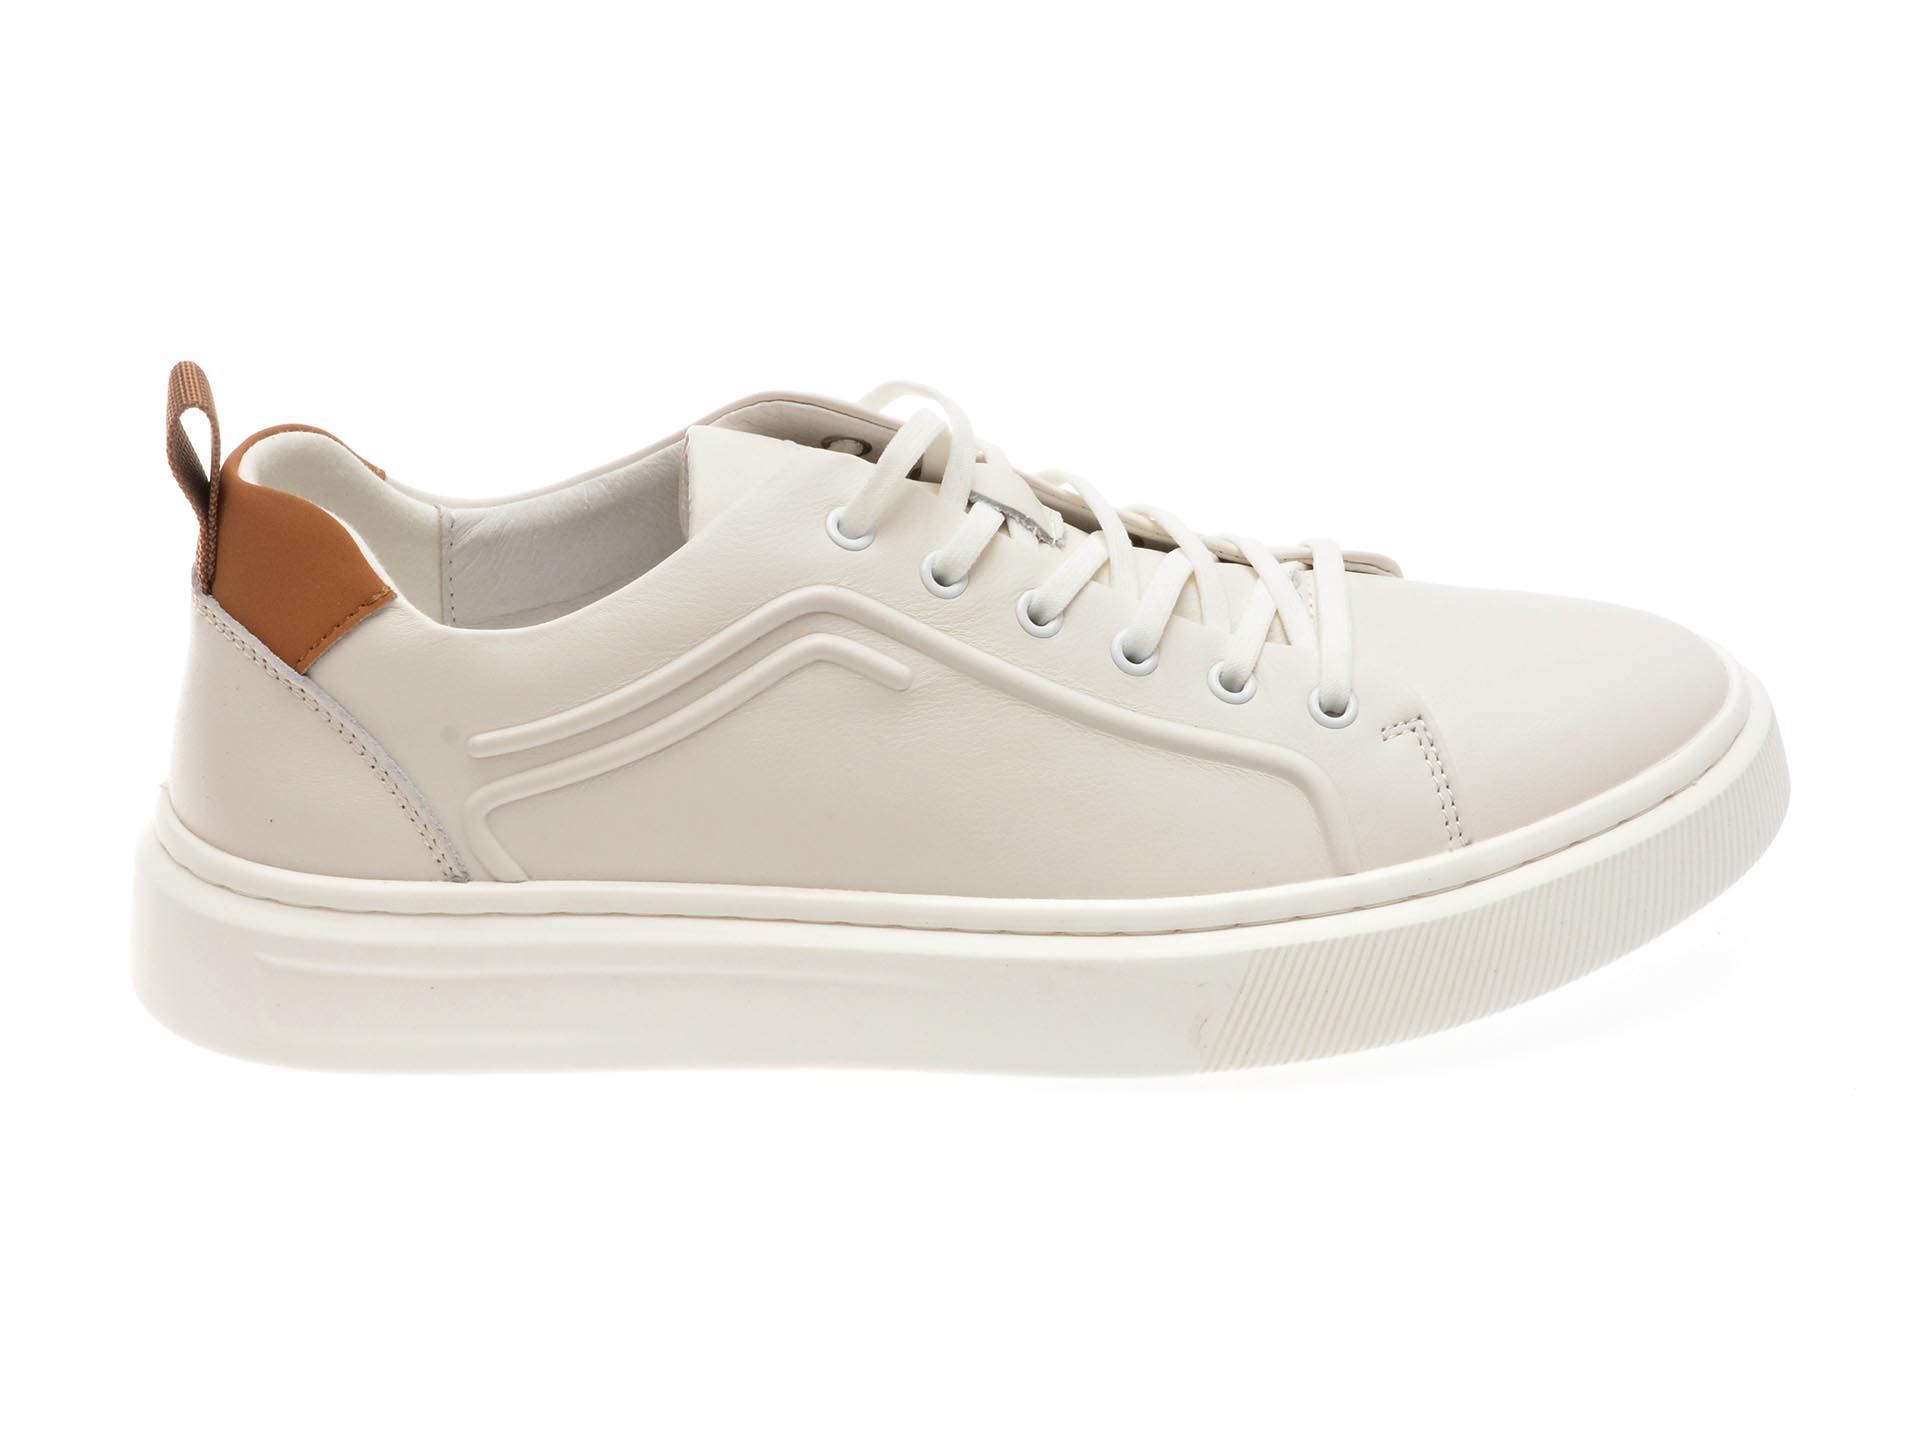 Pantofi casual OTTER albi, 3321, din piele naturala